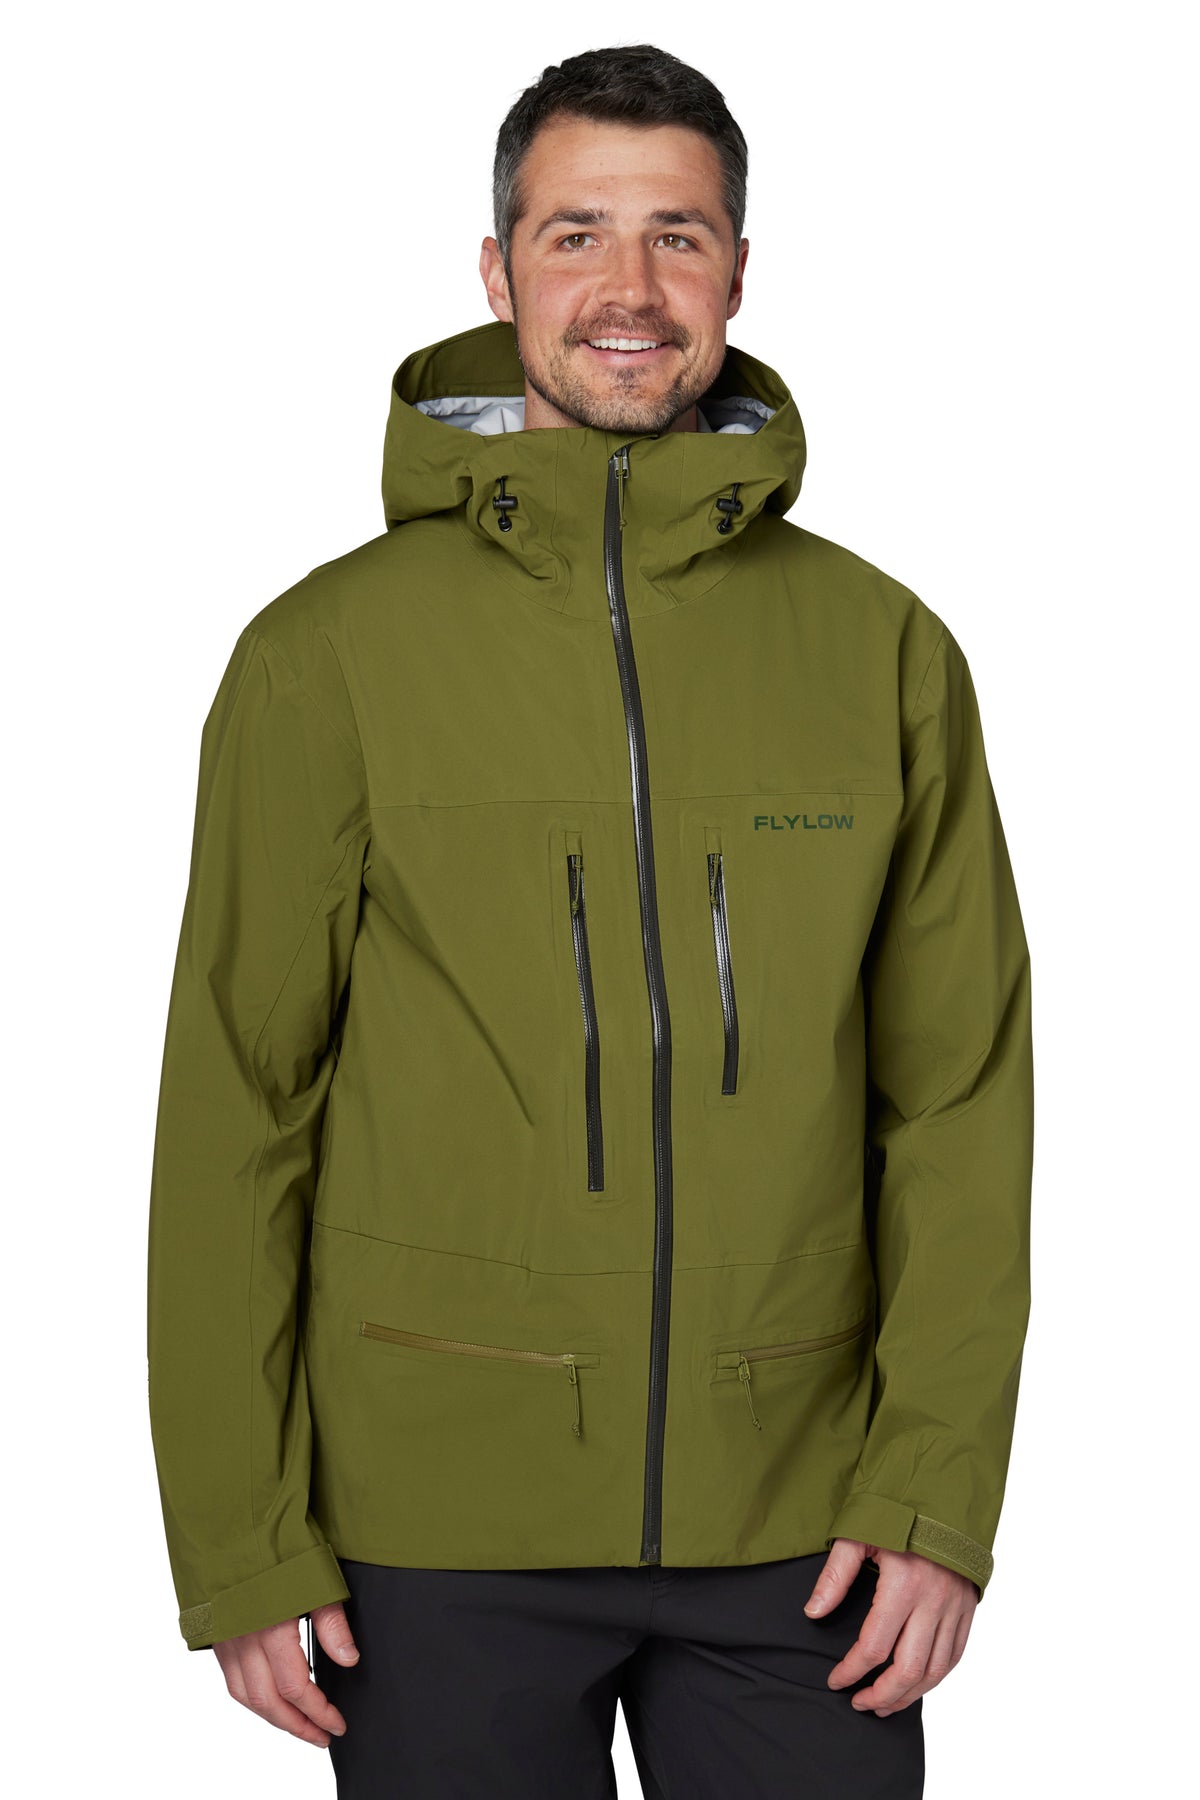 Kane Jacket - Men's Backcountry Ski Jacket | Flylow – Flylow Gear